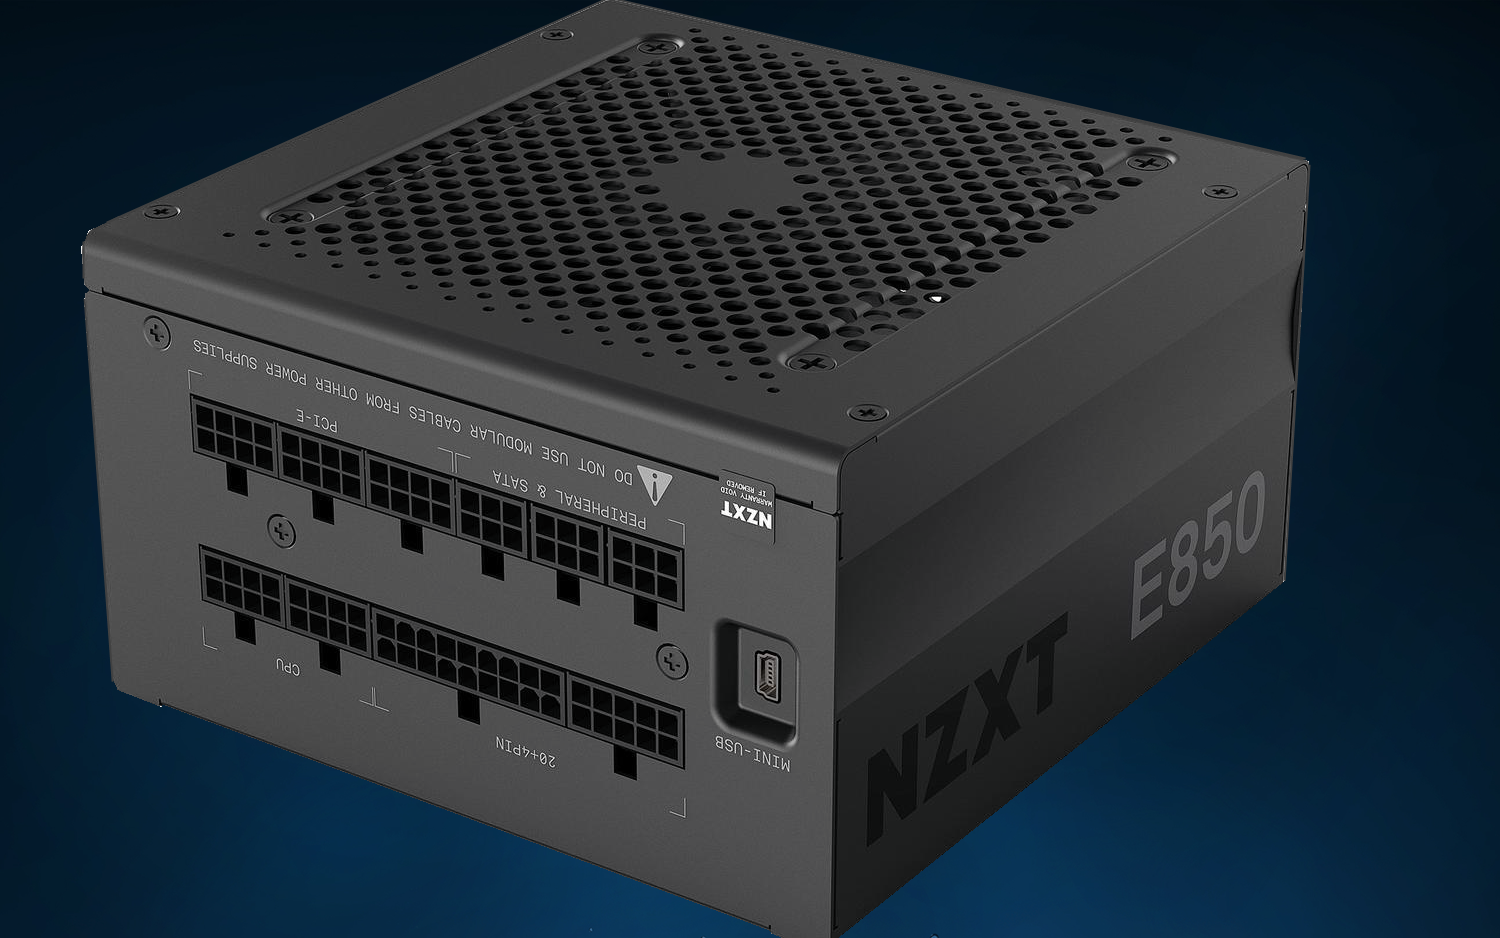 NZXT E850 PSU Review: An Analog Platform With Digital Enhancements